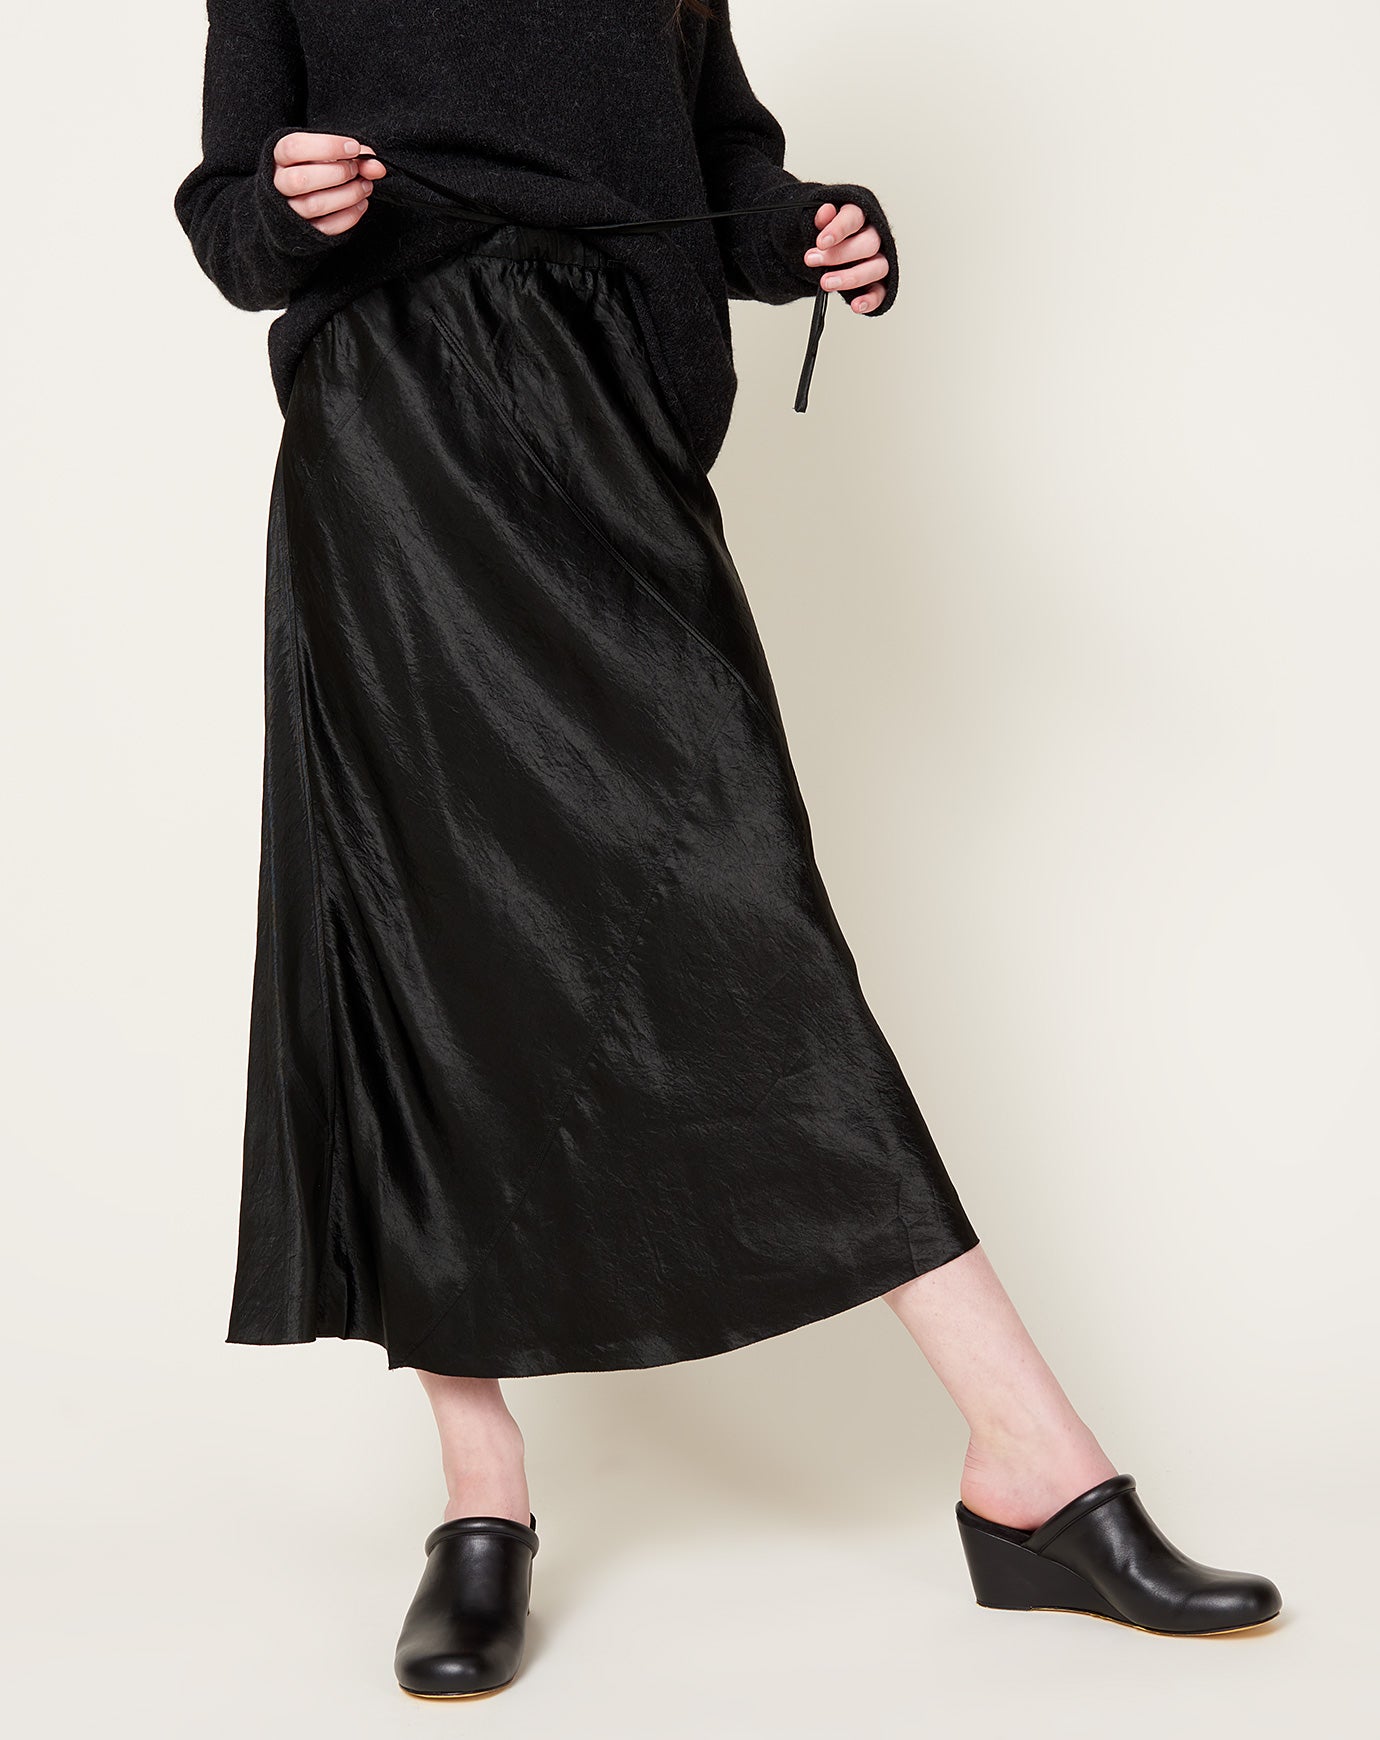 Lauren Manoogian Luster Bias Skirt in Black